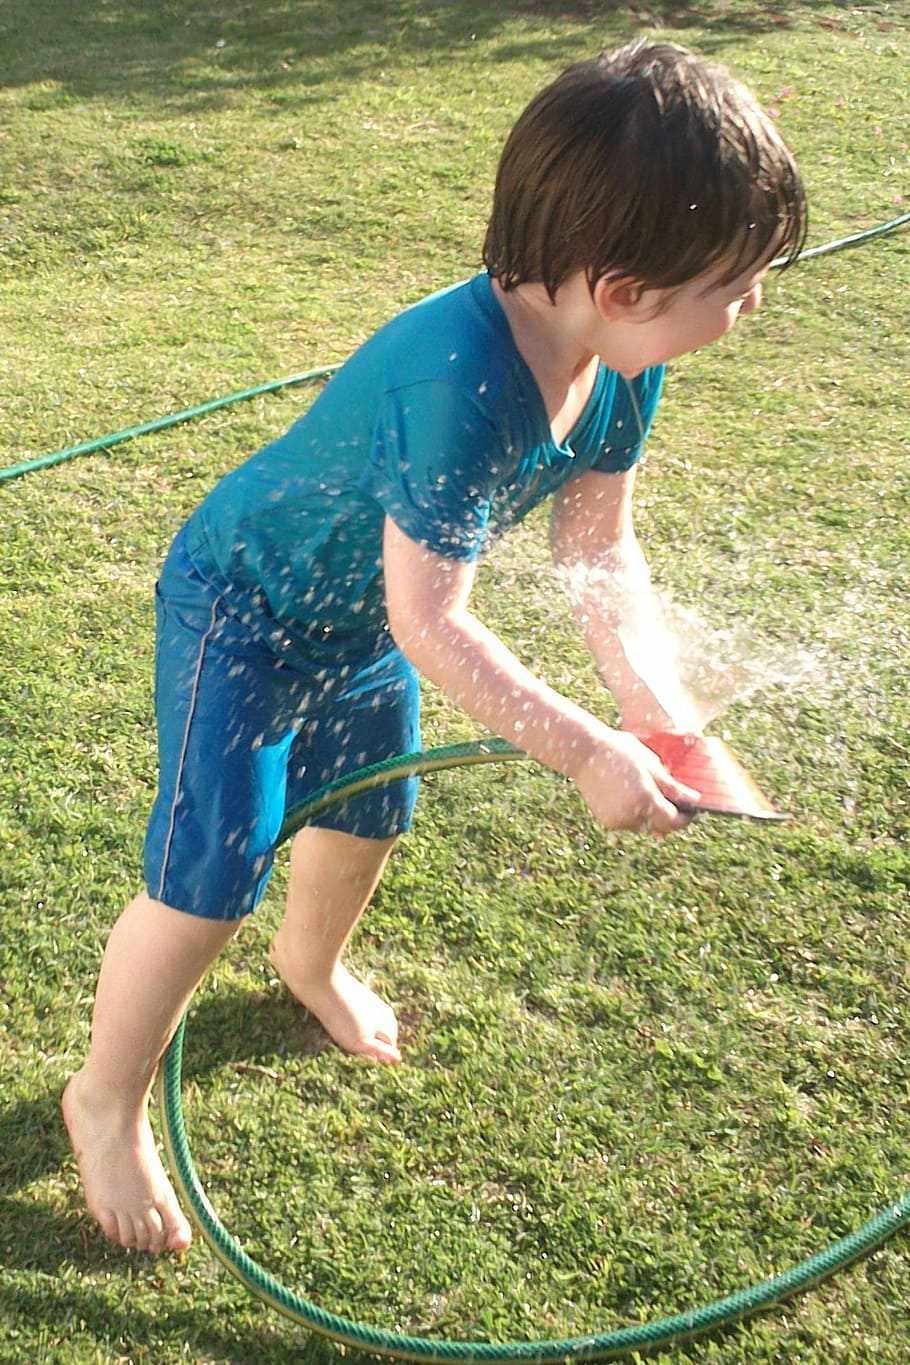 Child, Boy, Water, Fun, Wet, playing, toddler, garden hose, spraying, children only